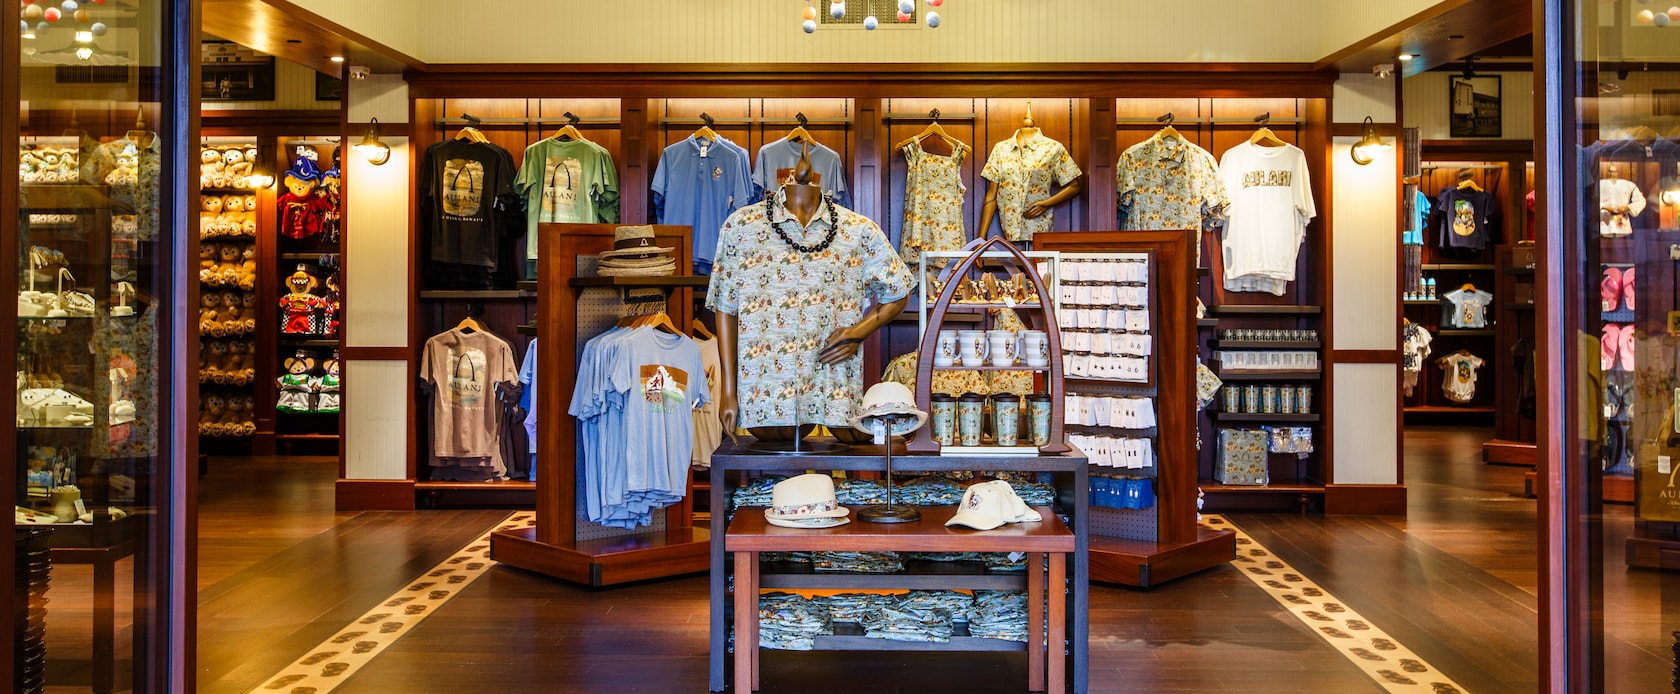 Disney-themed resort wear, mugs and jewelry displays inside Kalepa's Store, the Aulani Resort lobby gift shop